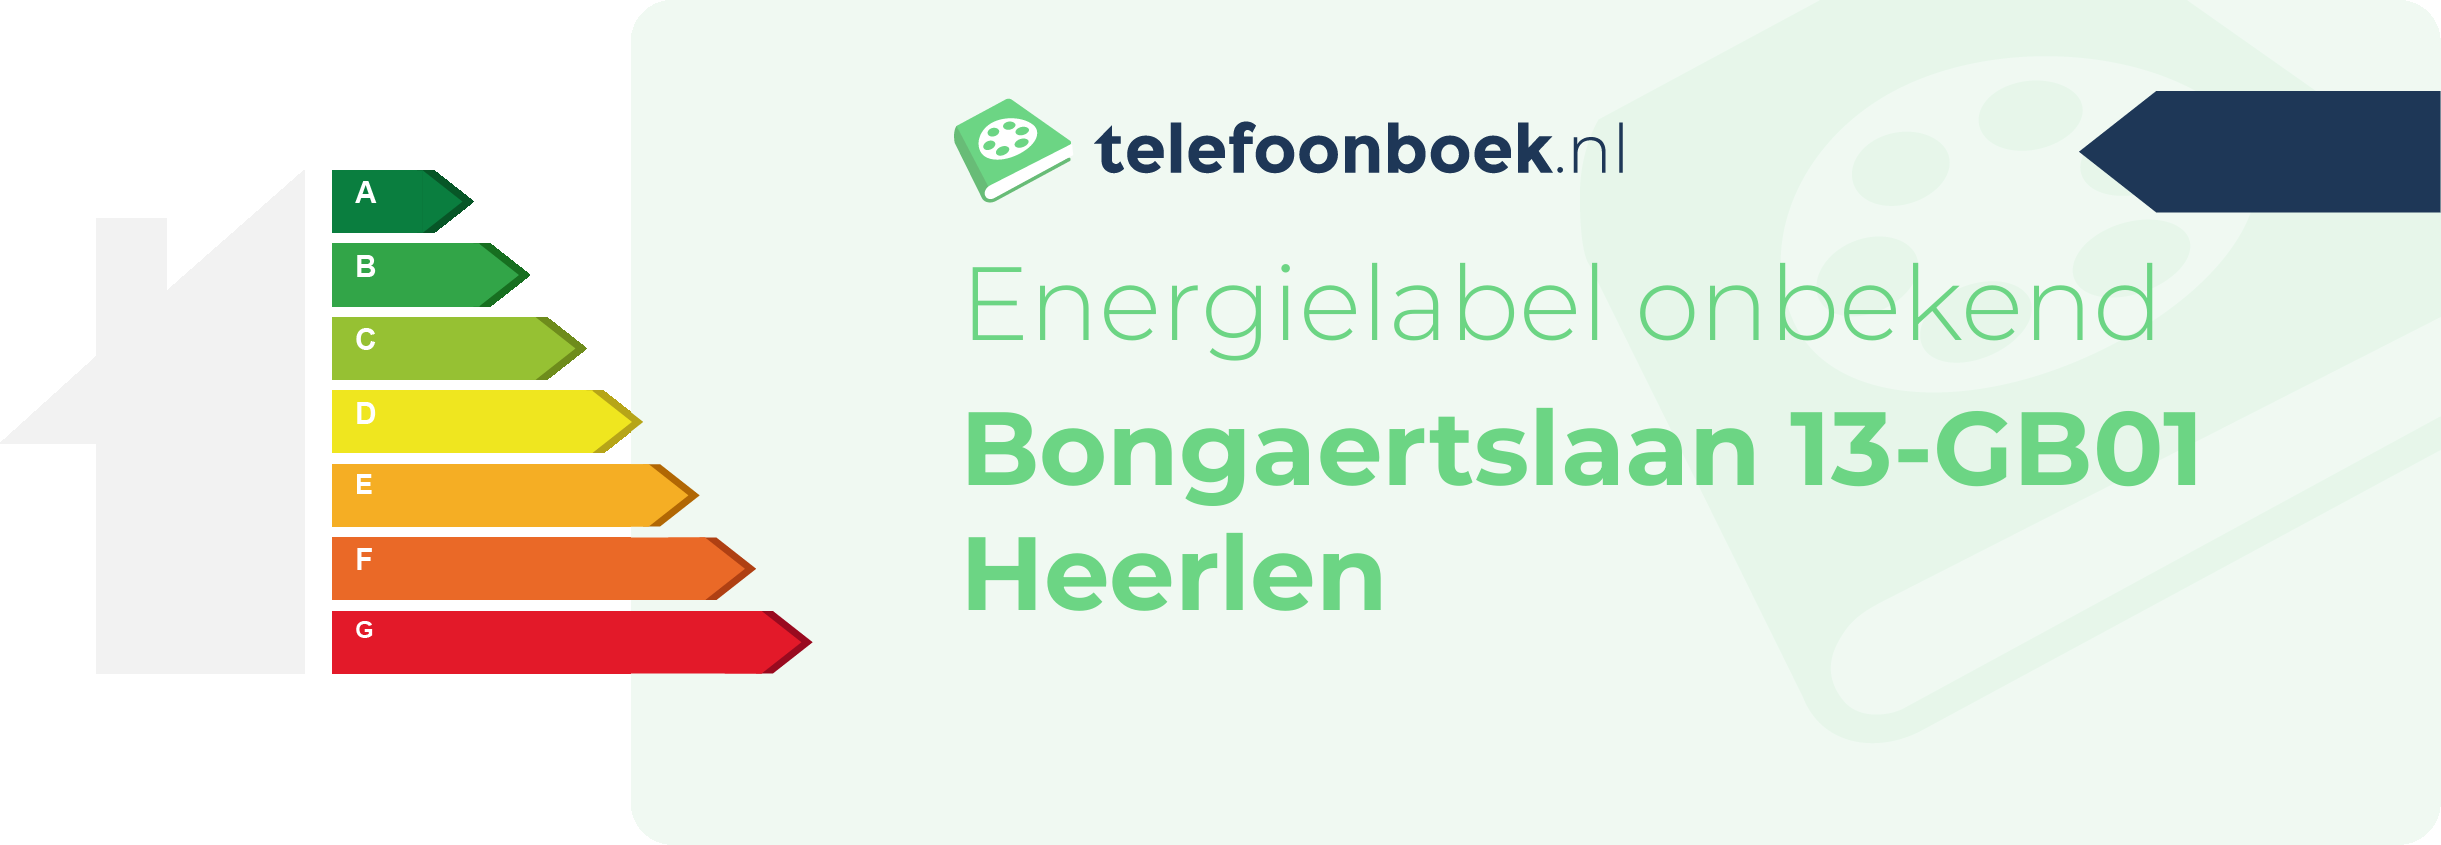 Energielabel Bongaertslaan 13-GB01 Heerlen